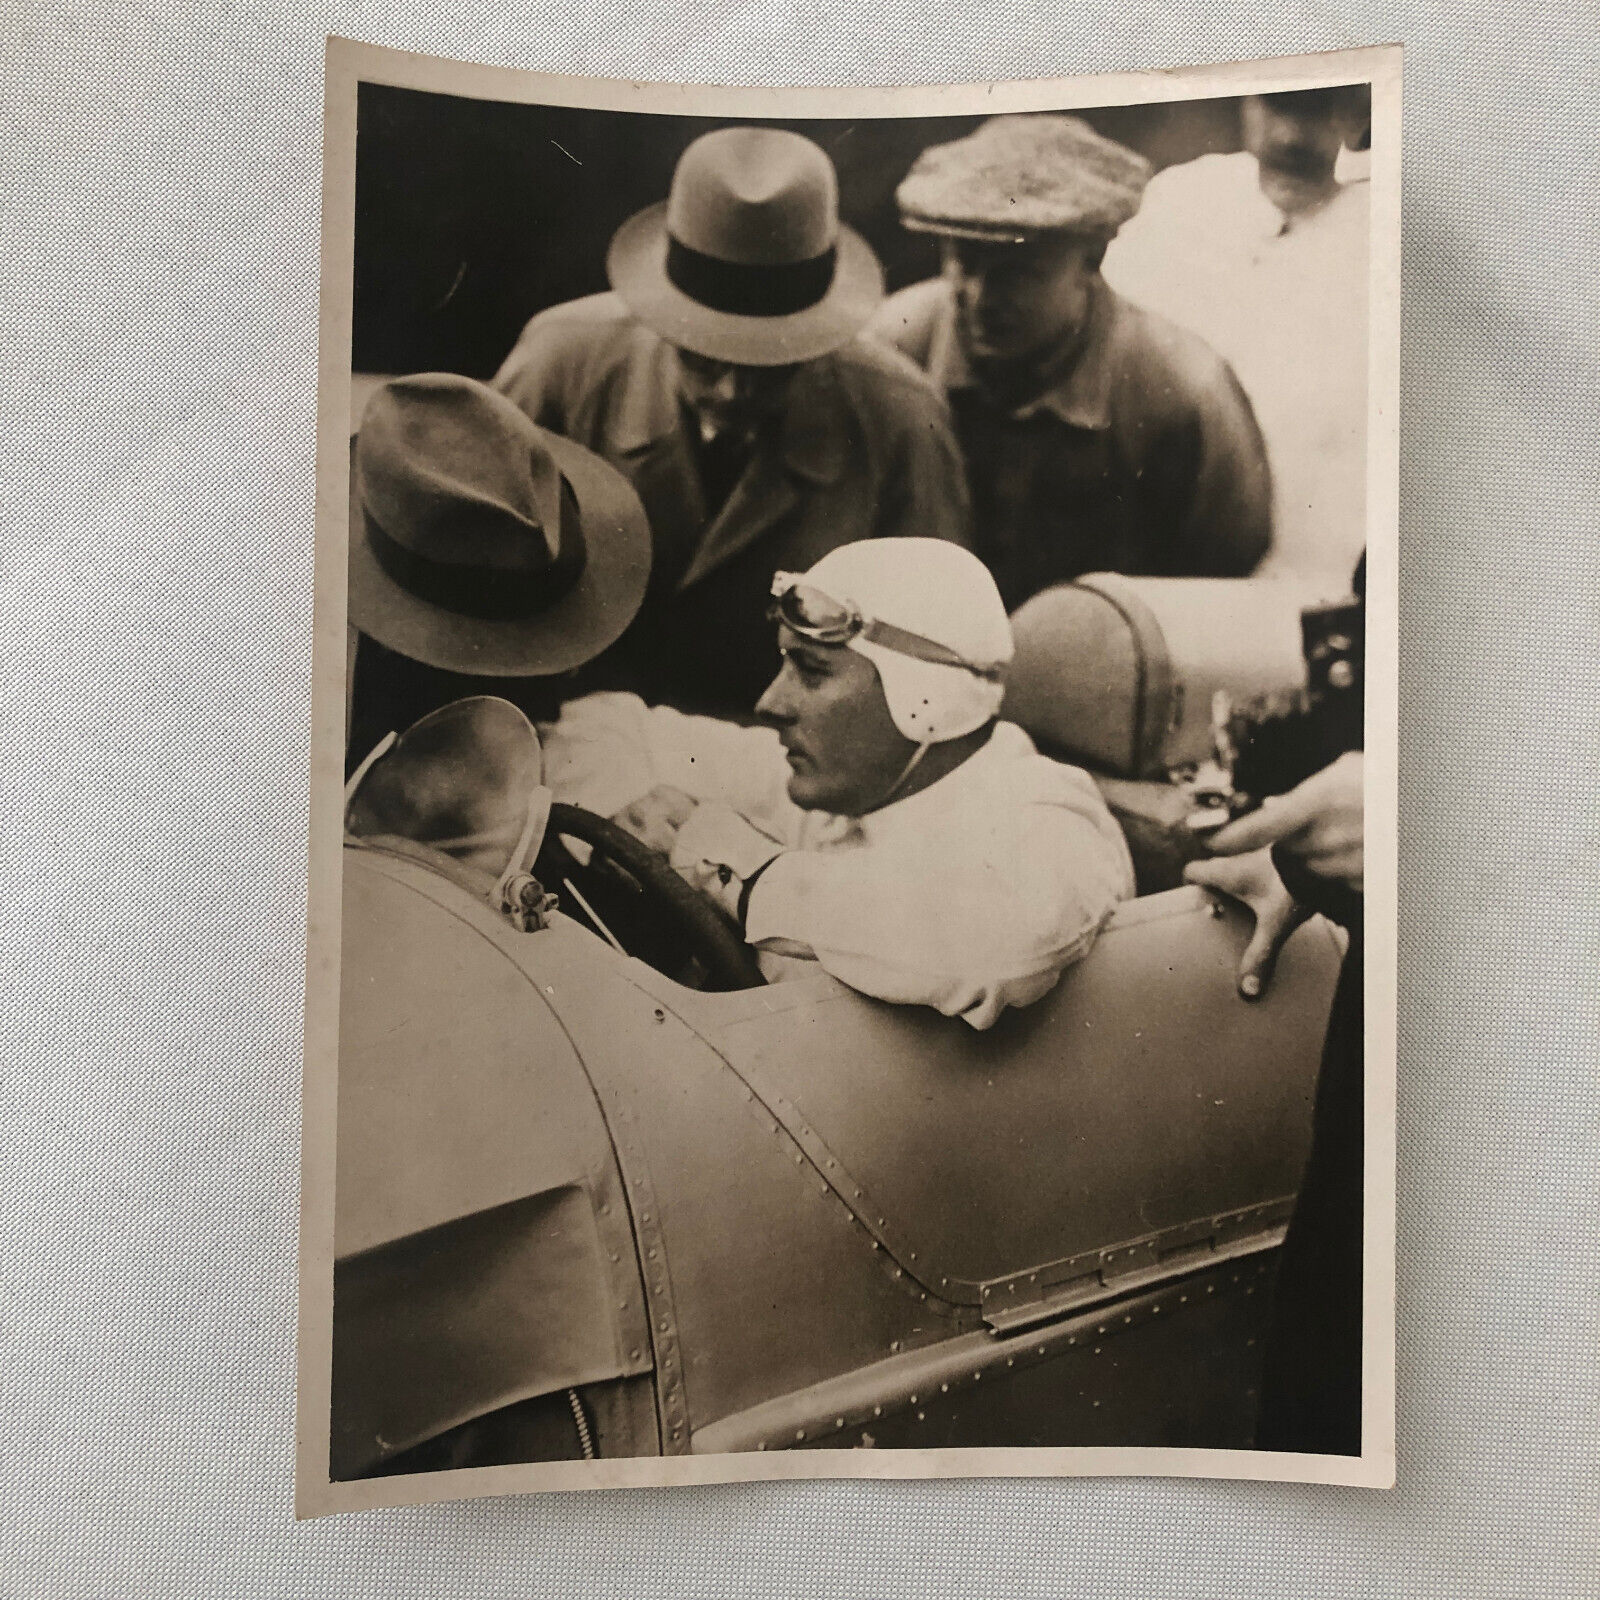 Press Photo Photograph Hans Stuck Racing Speed Record Avus Berlin 1934 LNA Photo